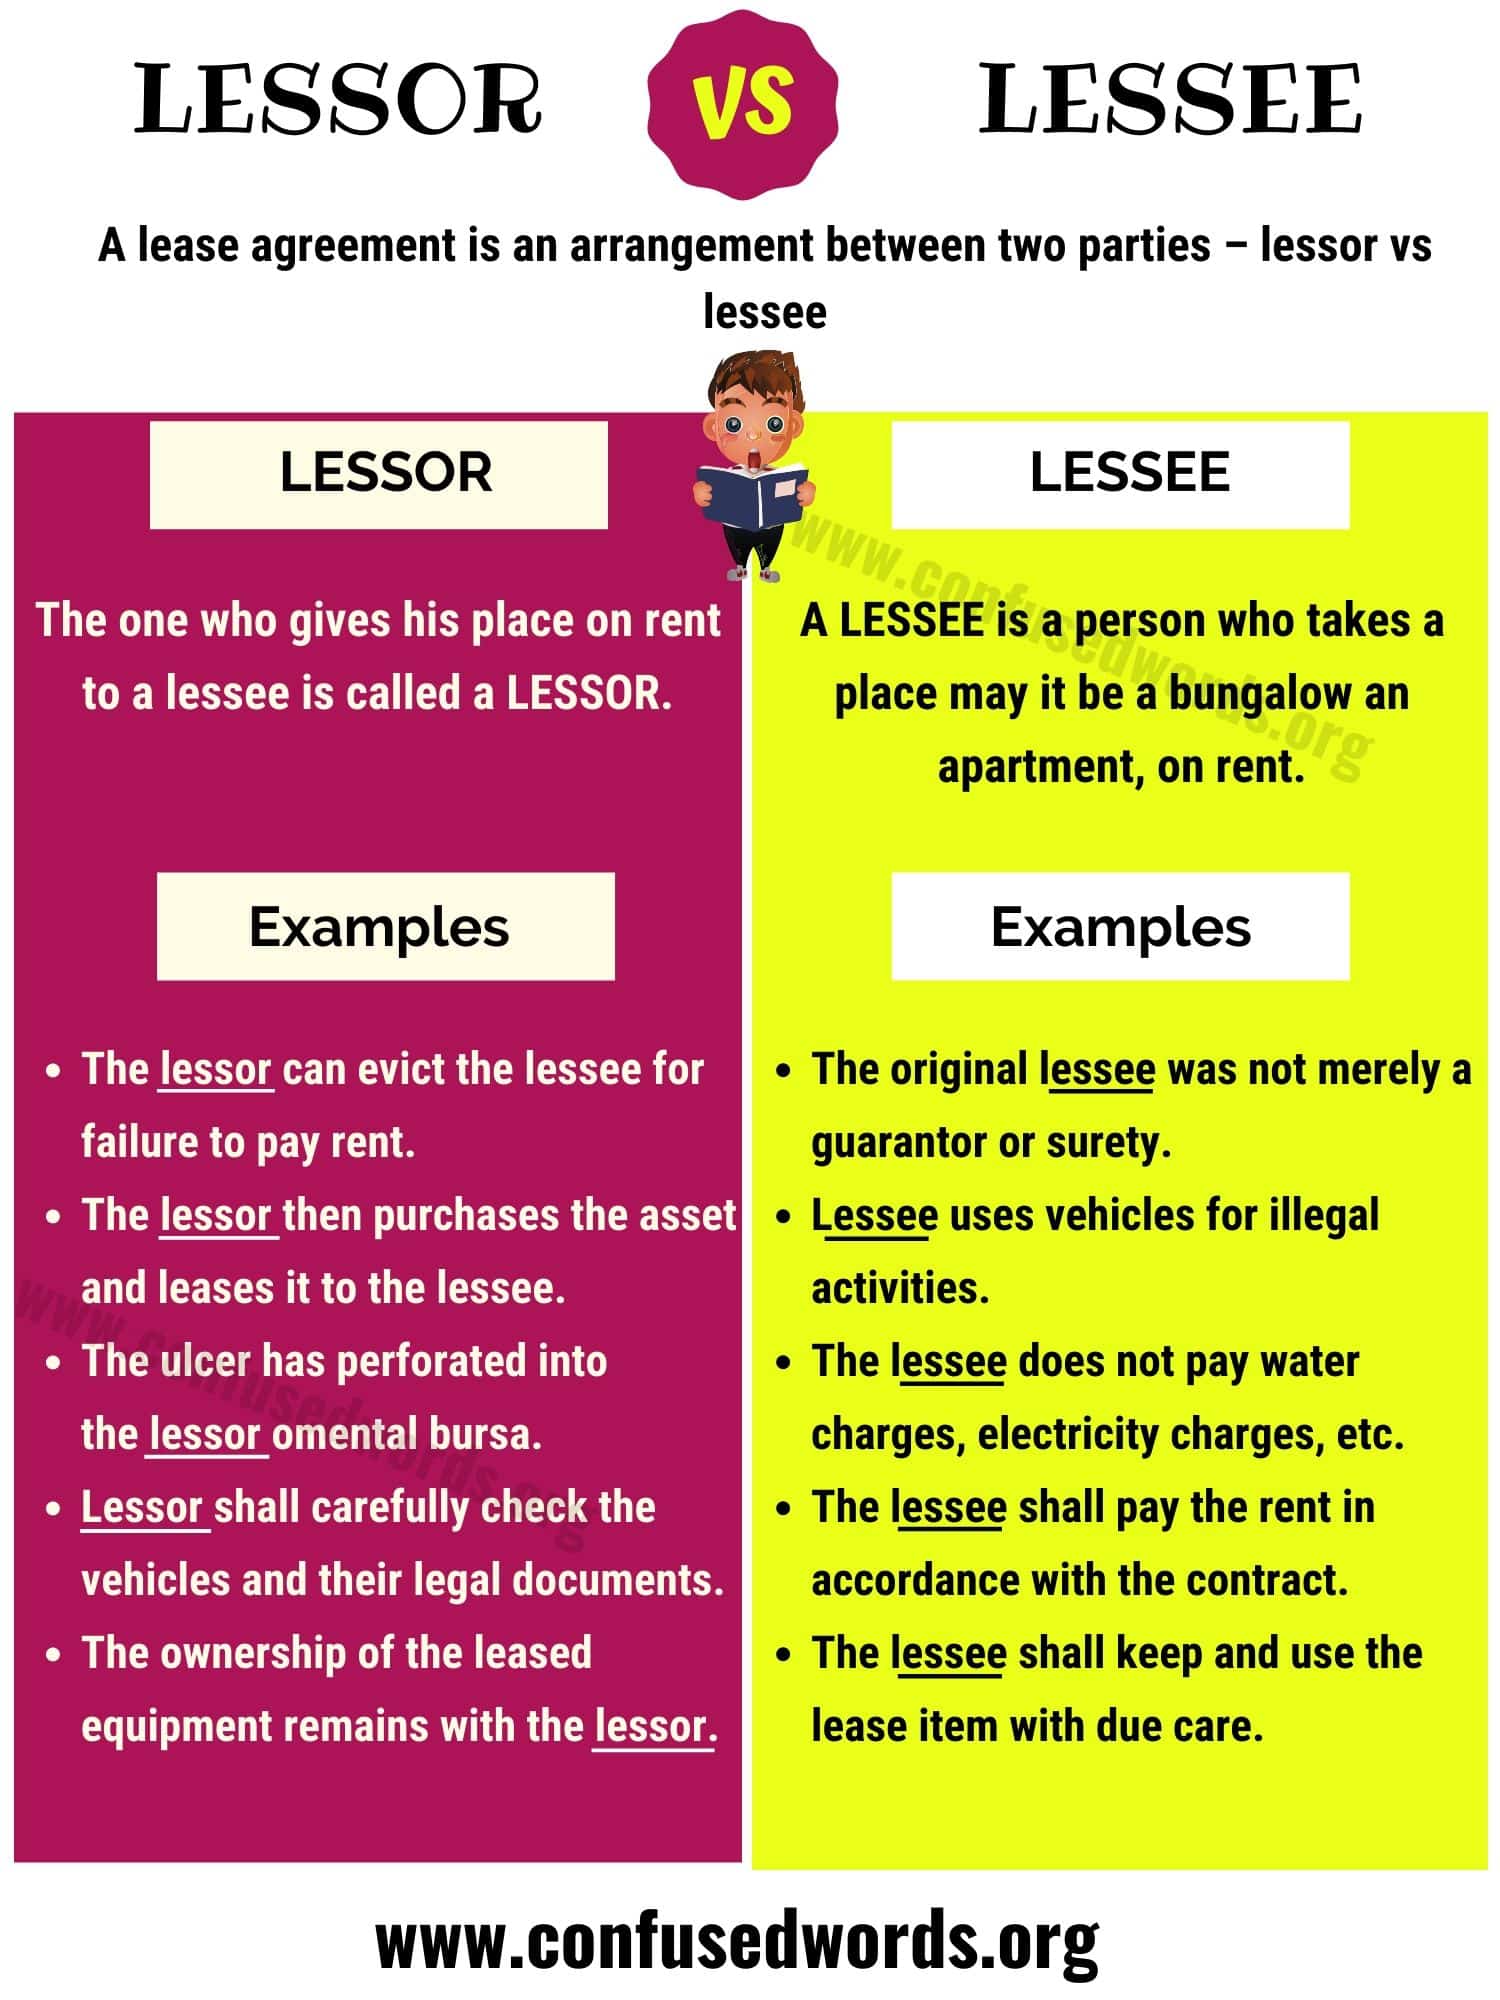 Lessor vs Lessee